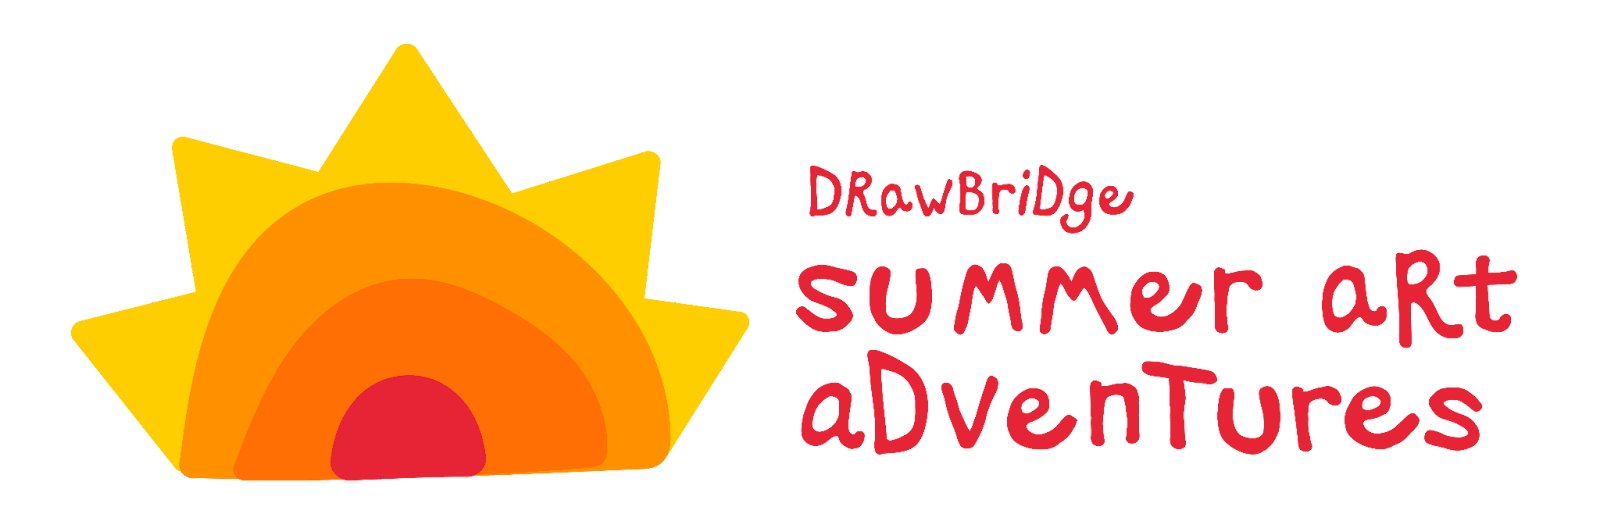 DrawBridge Summer Art Adventures